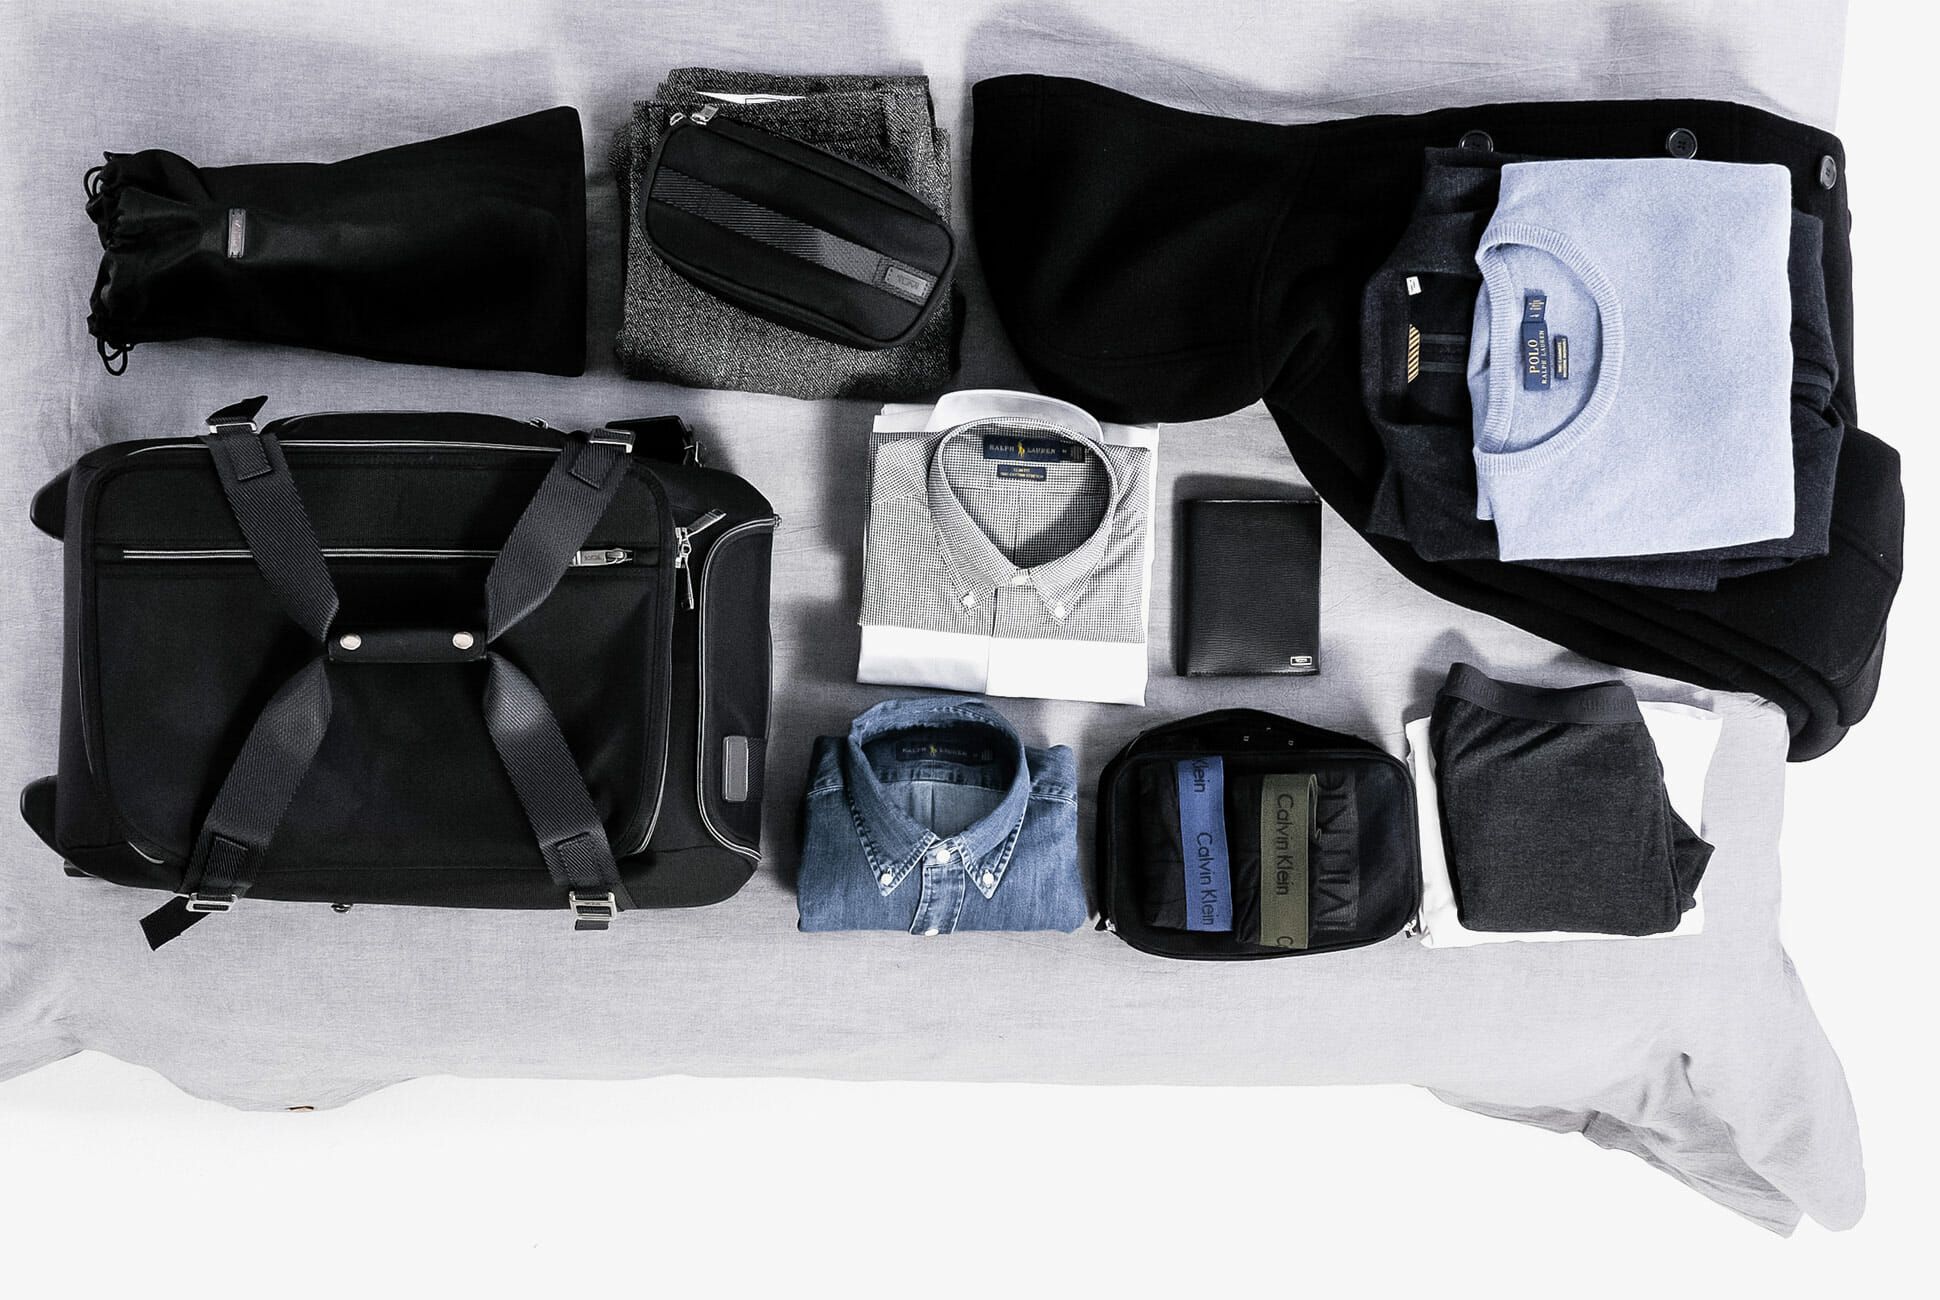 How to Pack a Dopp Kit Like a Pro - Gear Patrol